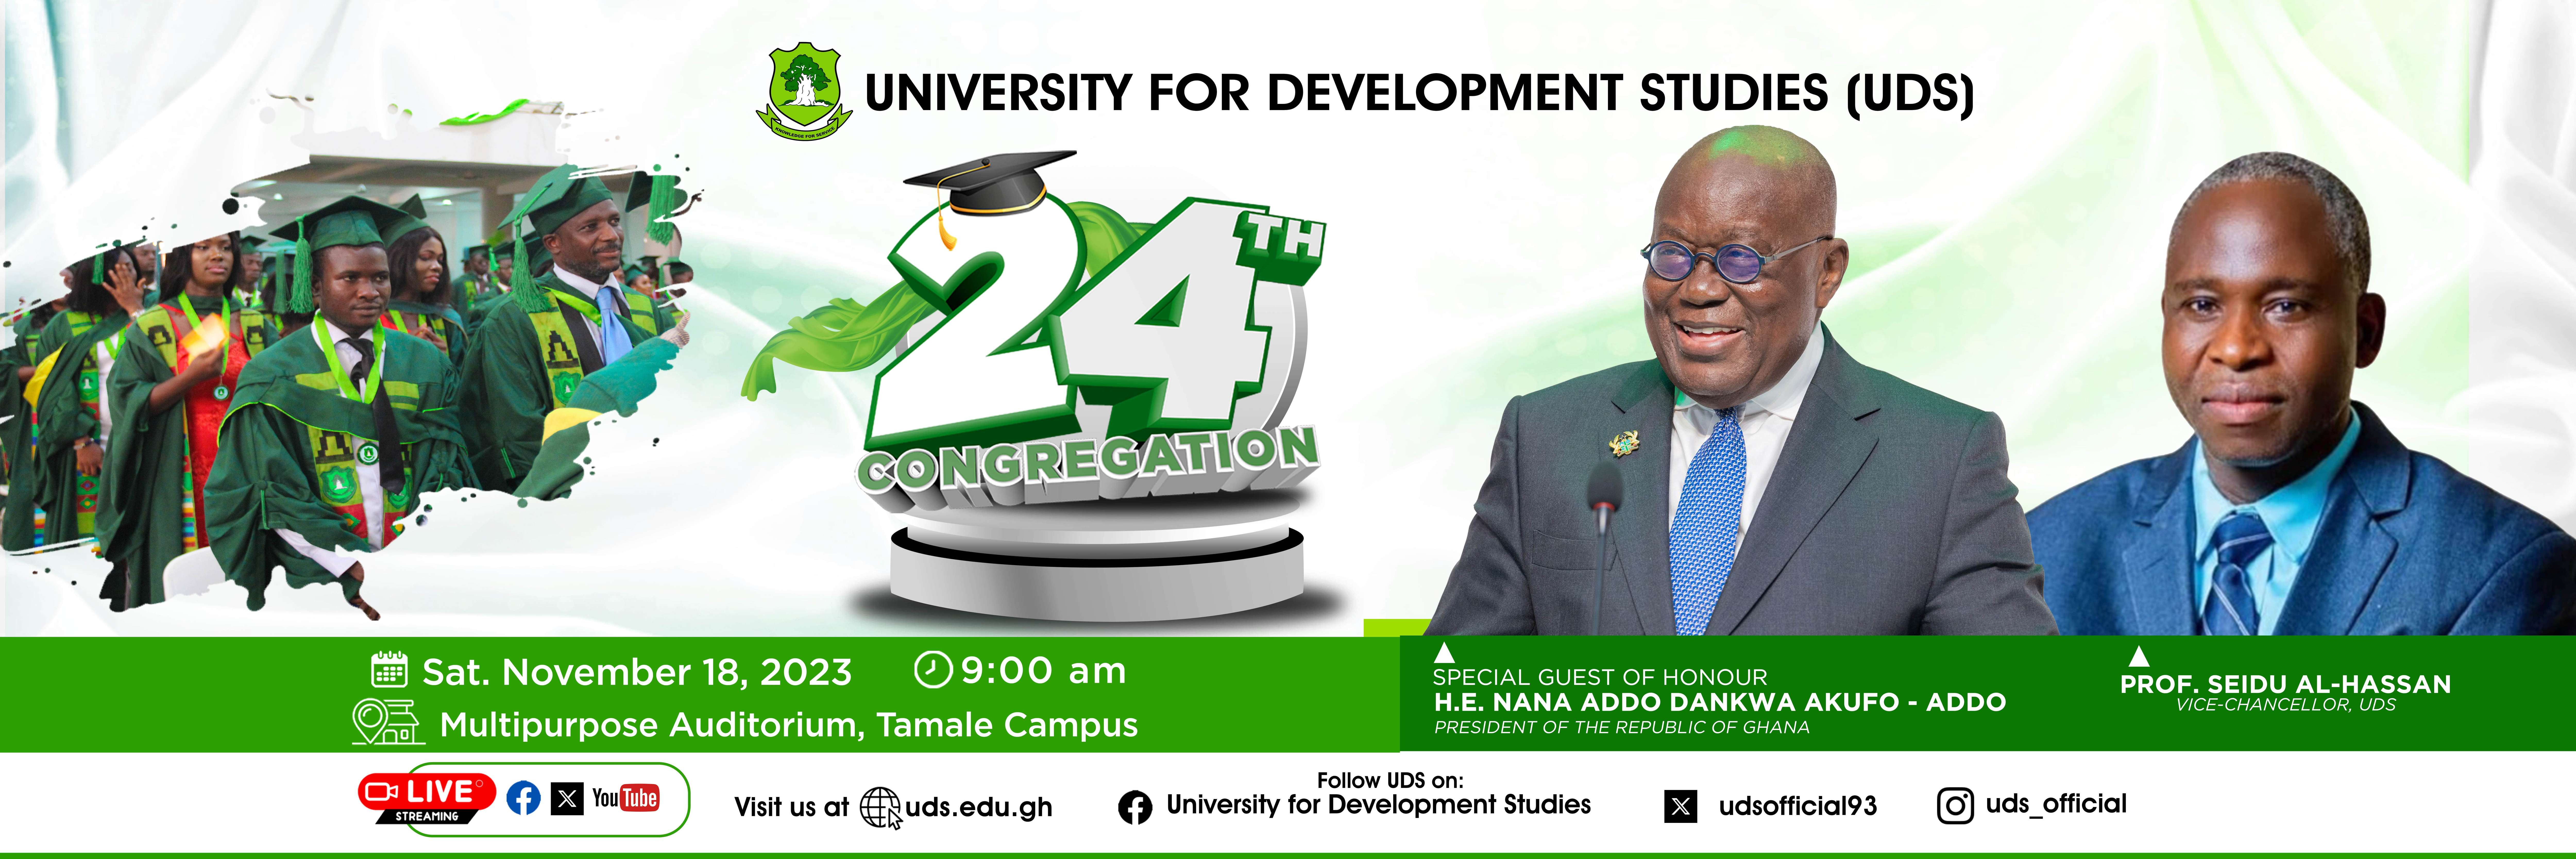 University for Development Studies (UDS) 24th Congregation